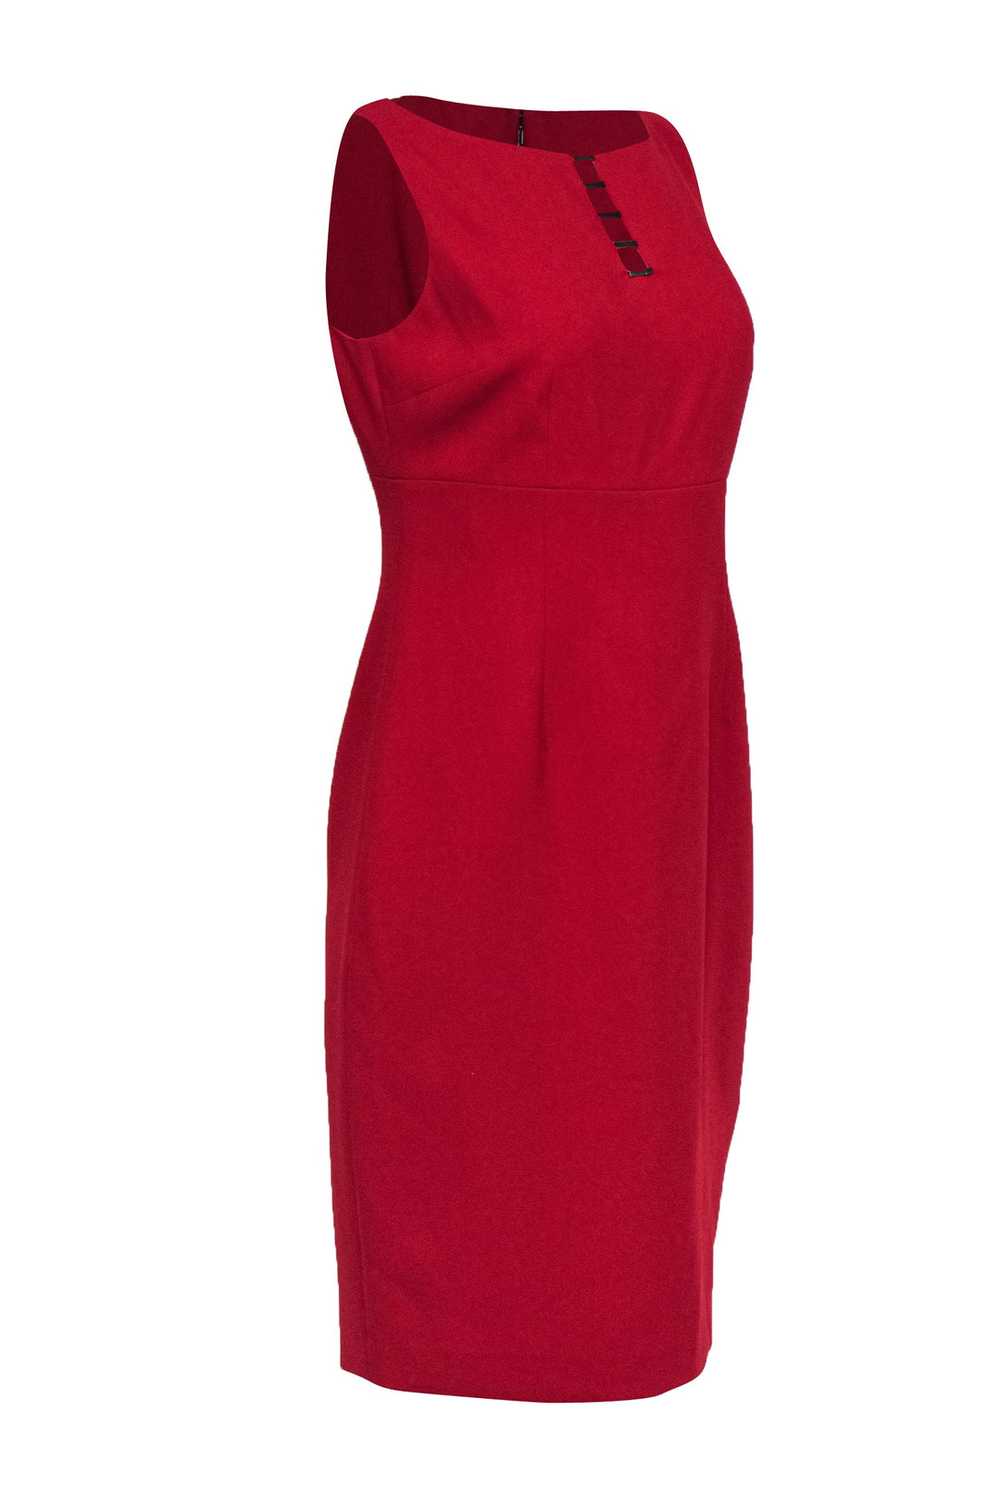 Elie Tahari - Red Sleeveless Sheath Dress Sz 6 - image 2